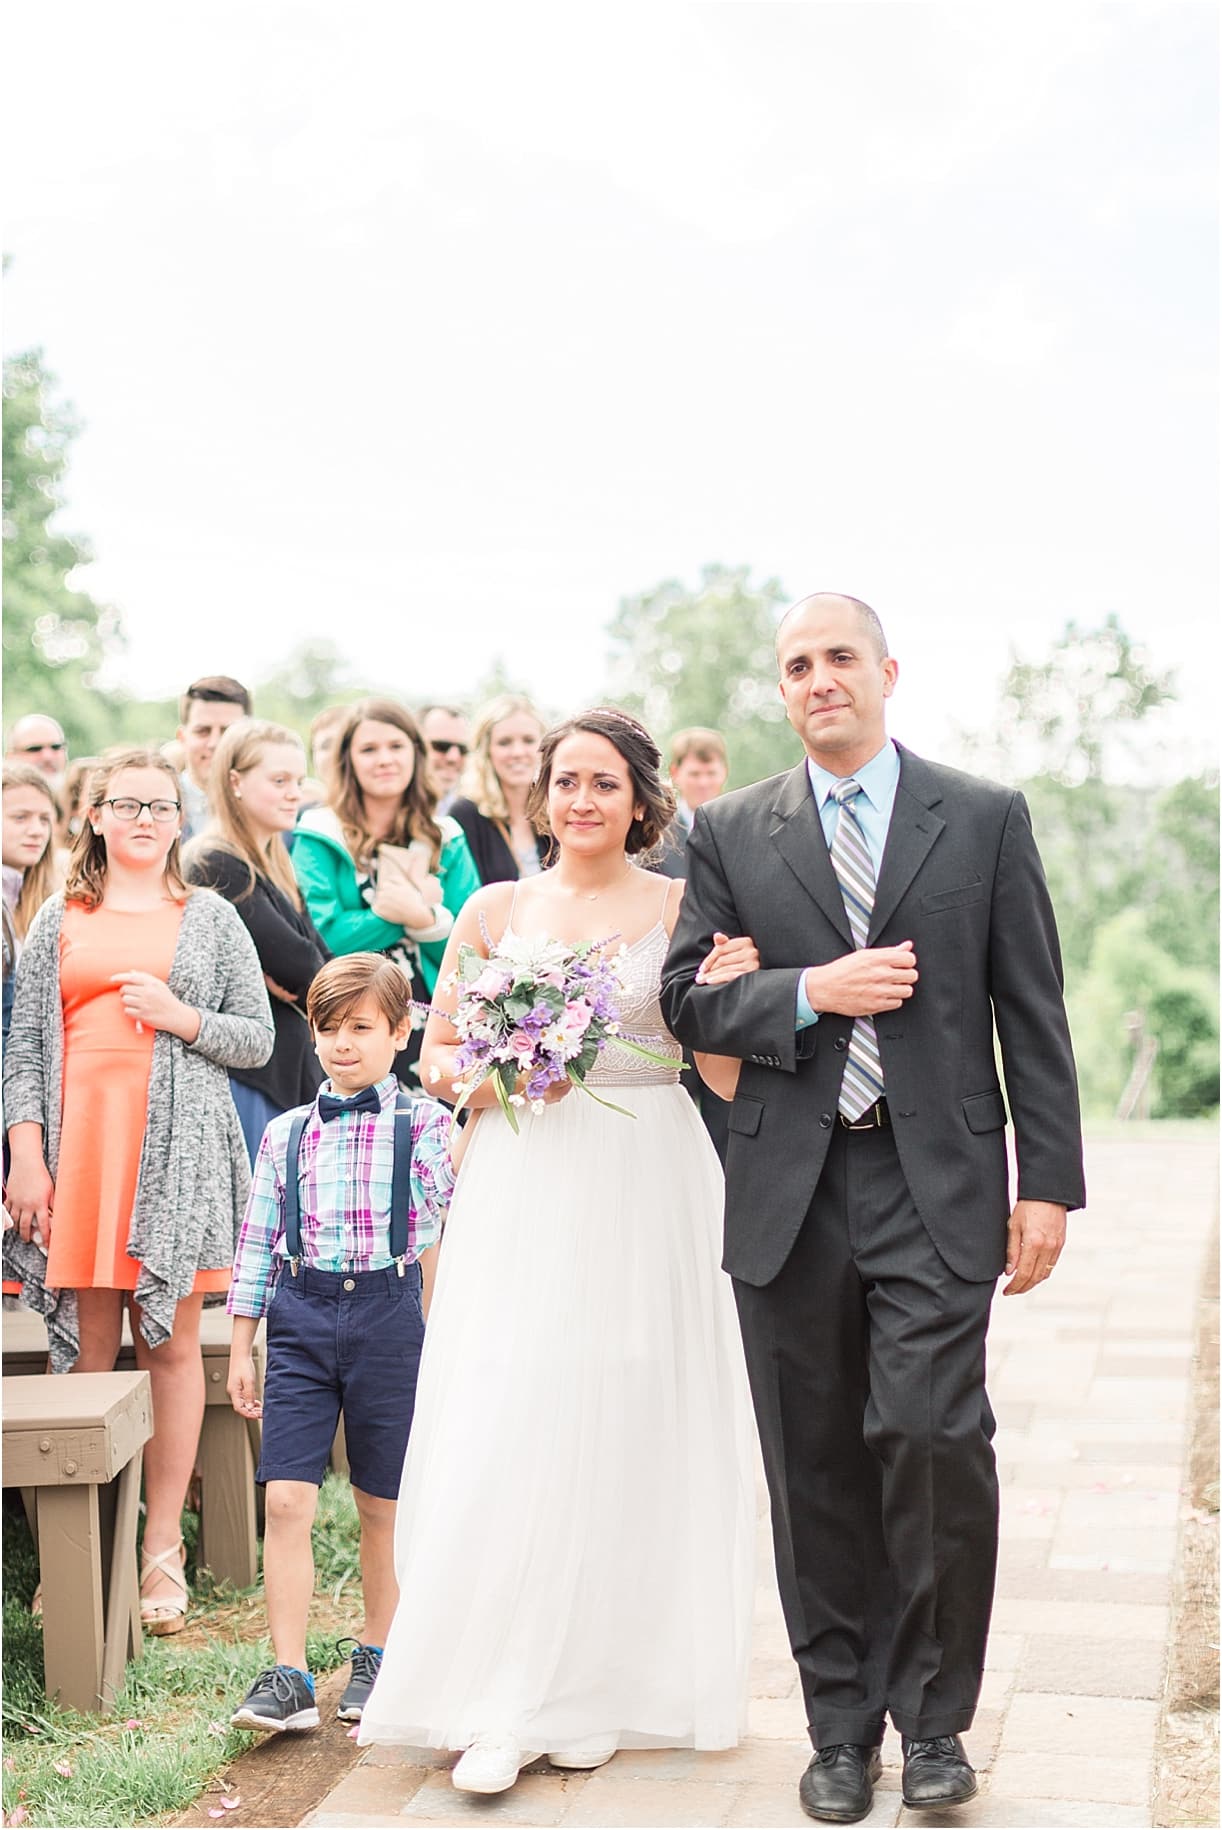 Spring Vineyard Wedding | Hill City Bride Virginia Wedding Blog - Jessica Green Photography - father aisle walking